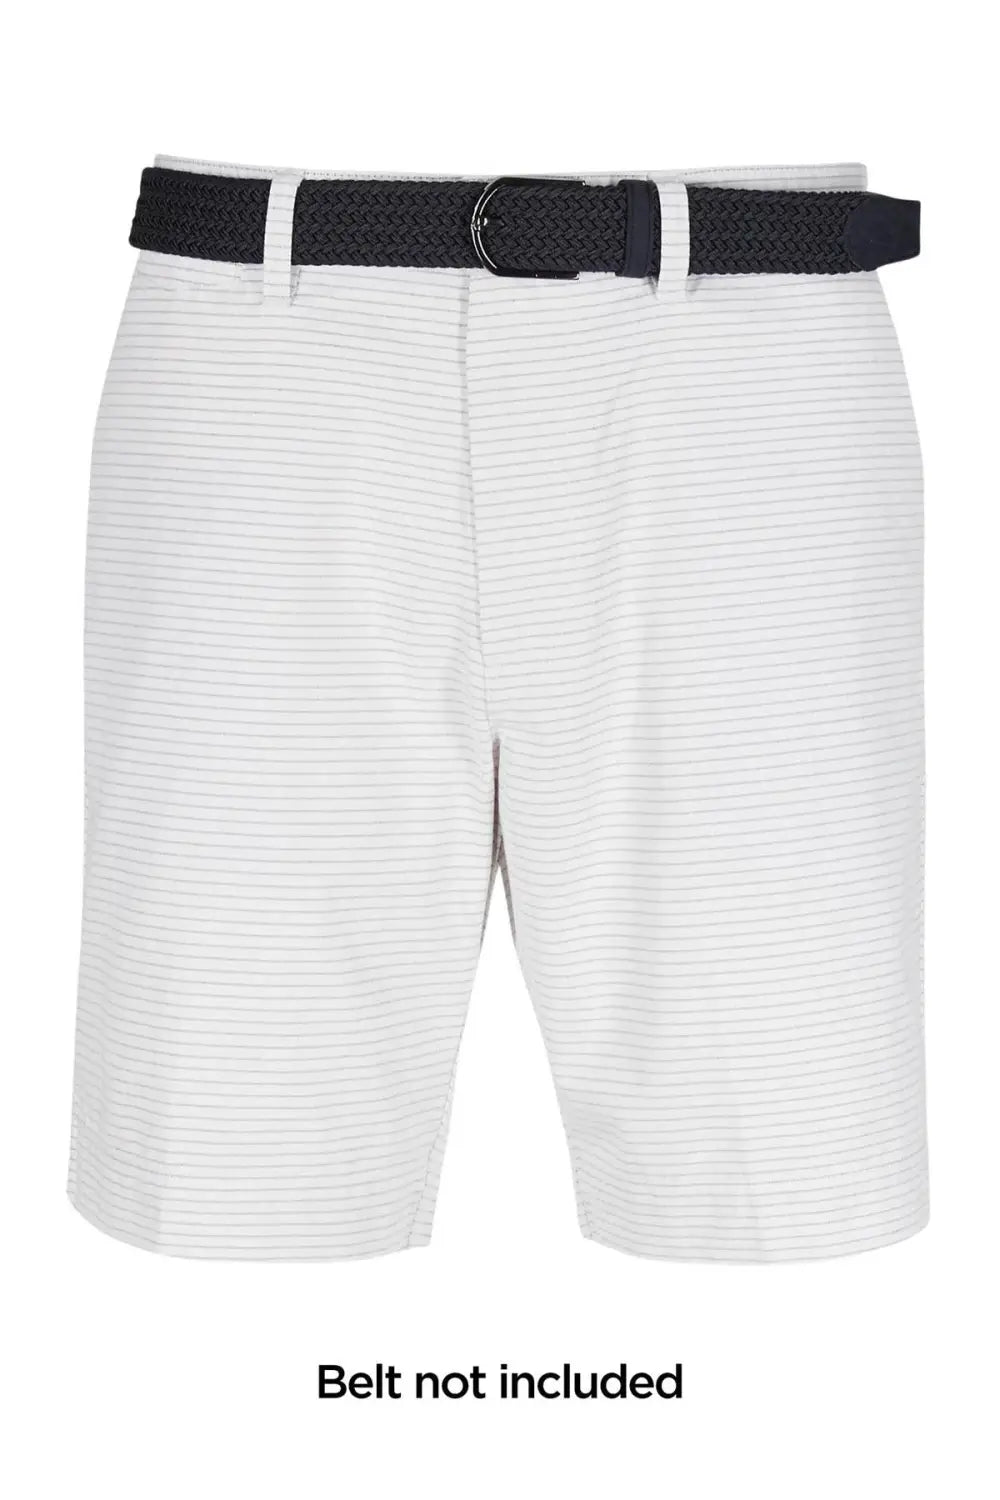 M&S Cotton Stripe Shorts